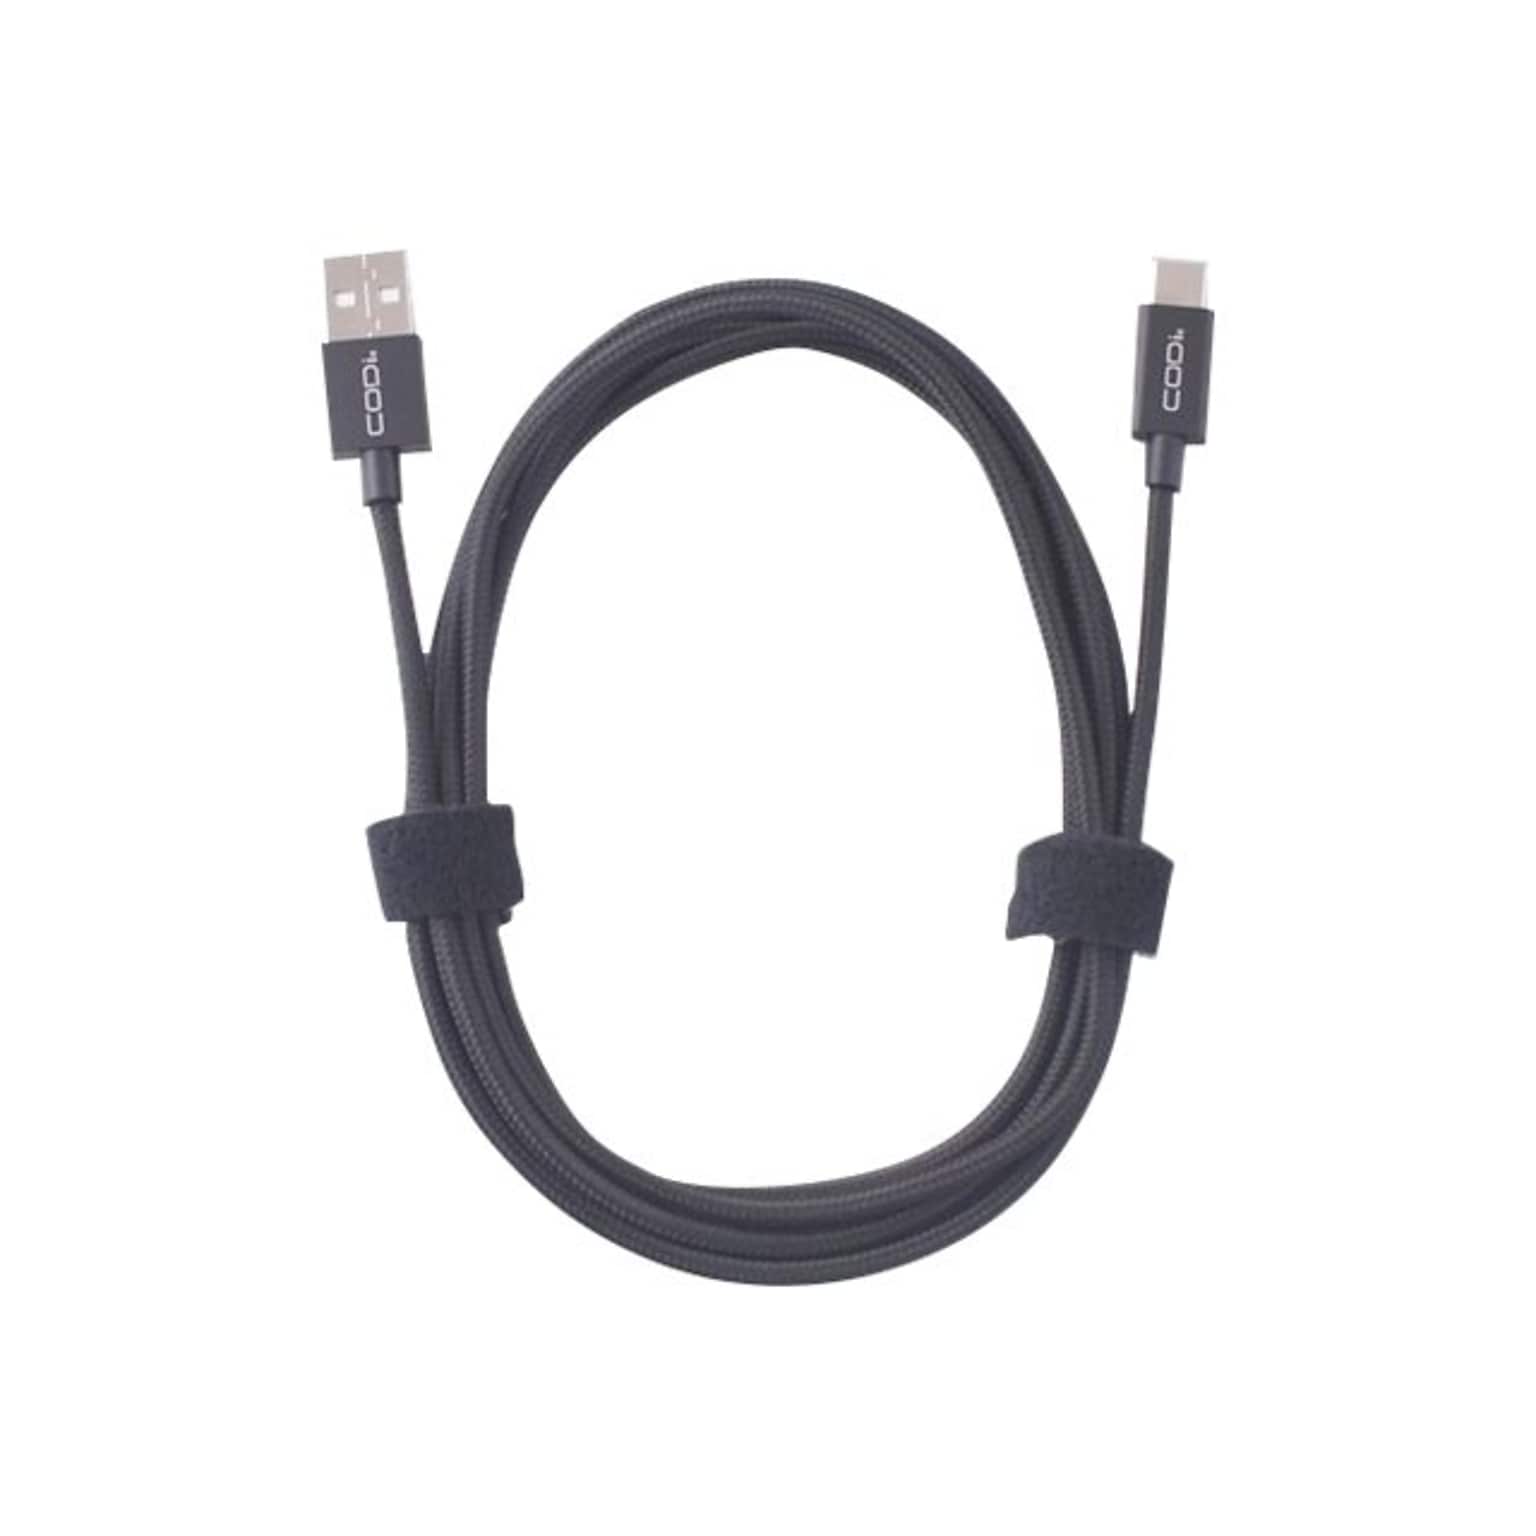 CODi 6 USB-C to USB-A Braided Nylon Charge & Sync Cable, Black (A10161)